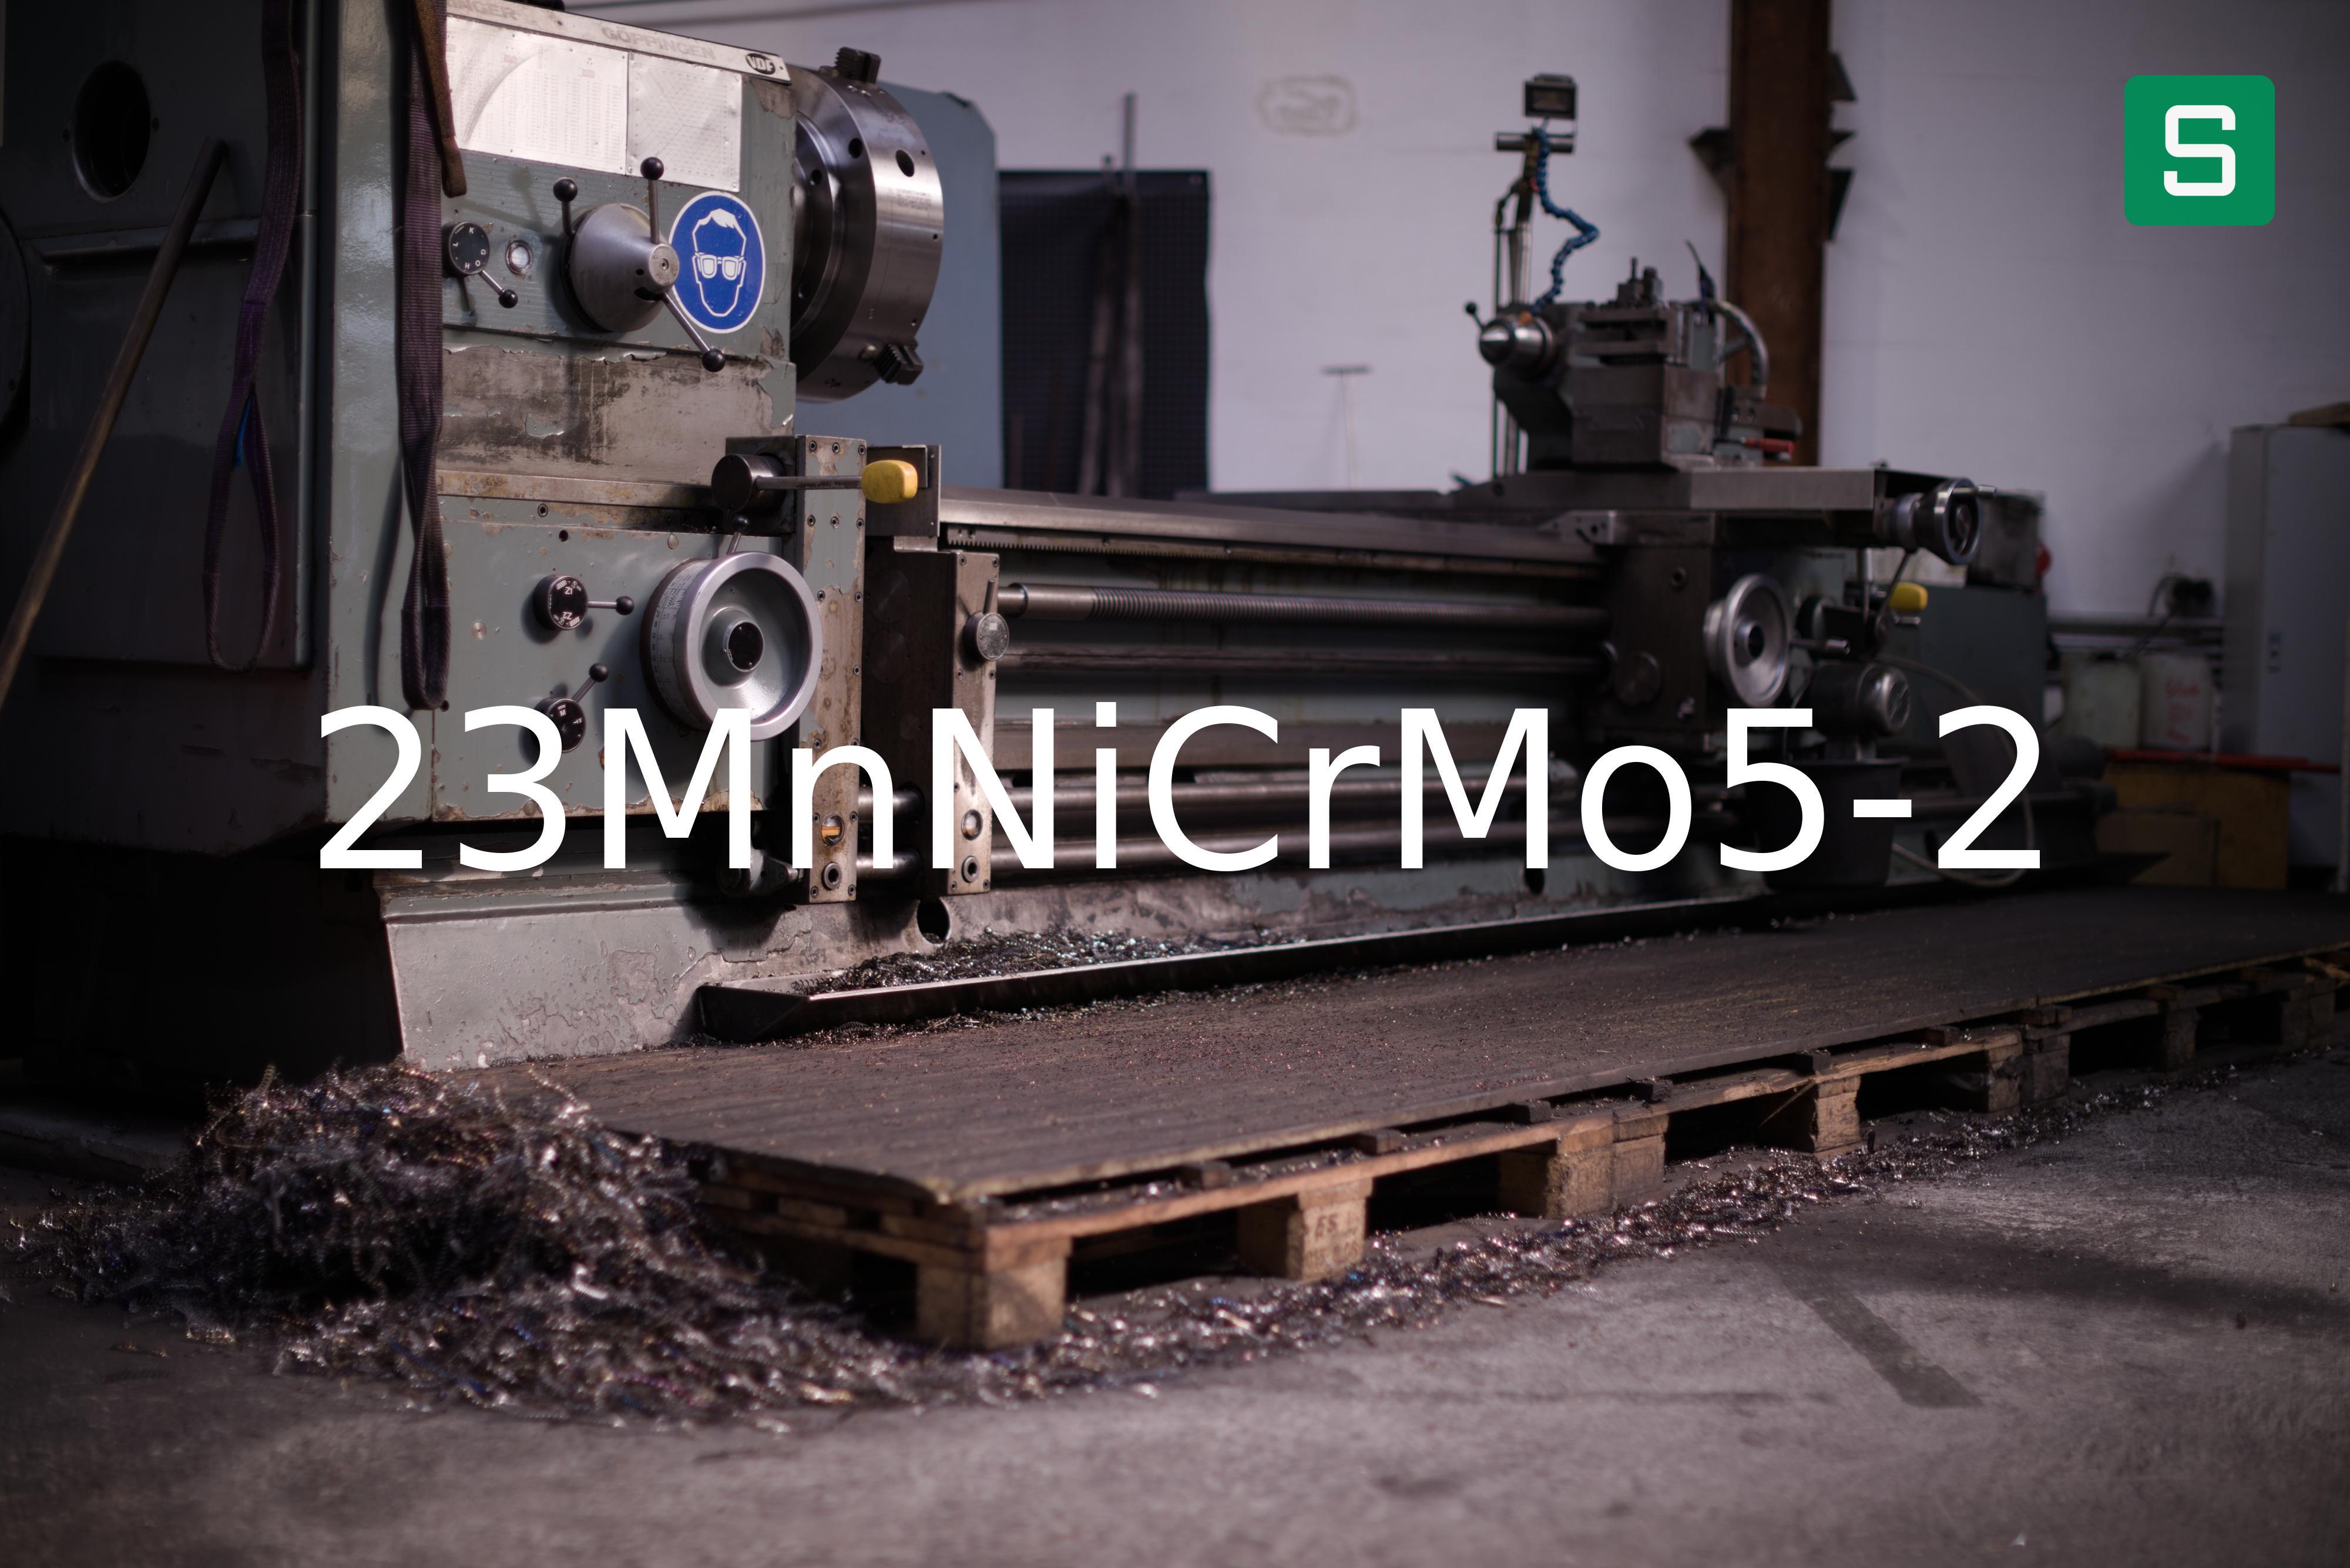 Steel Material: 23MnNiCrMo5-2